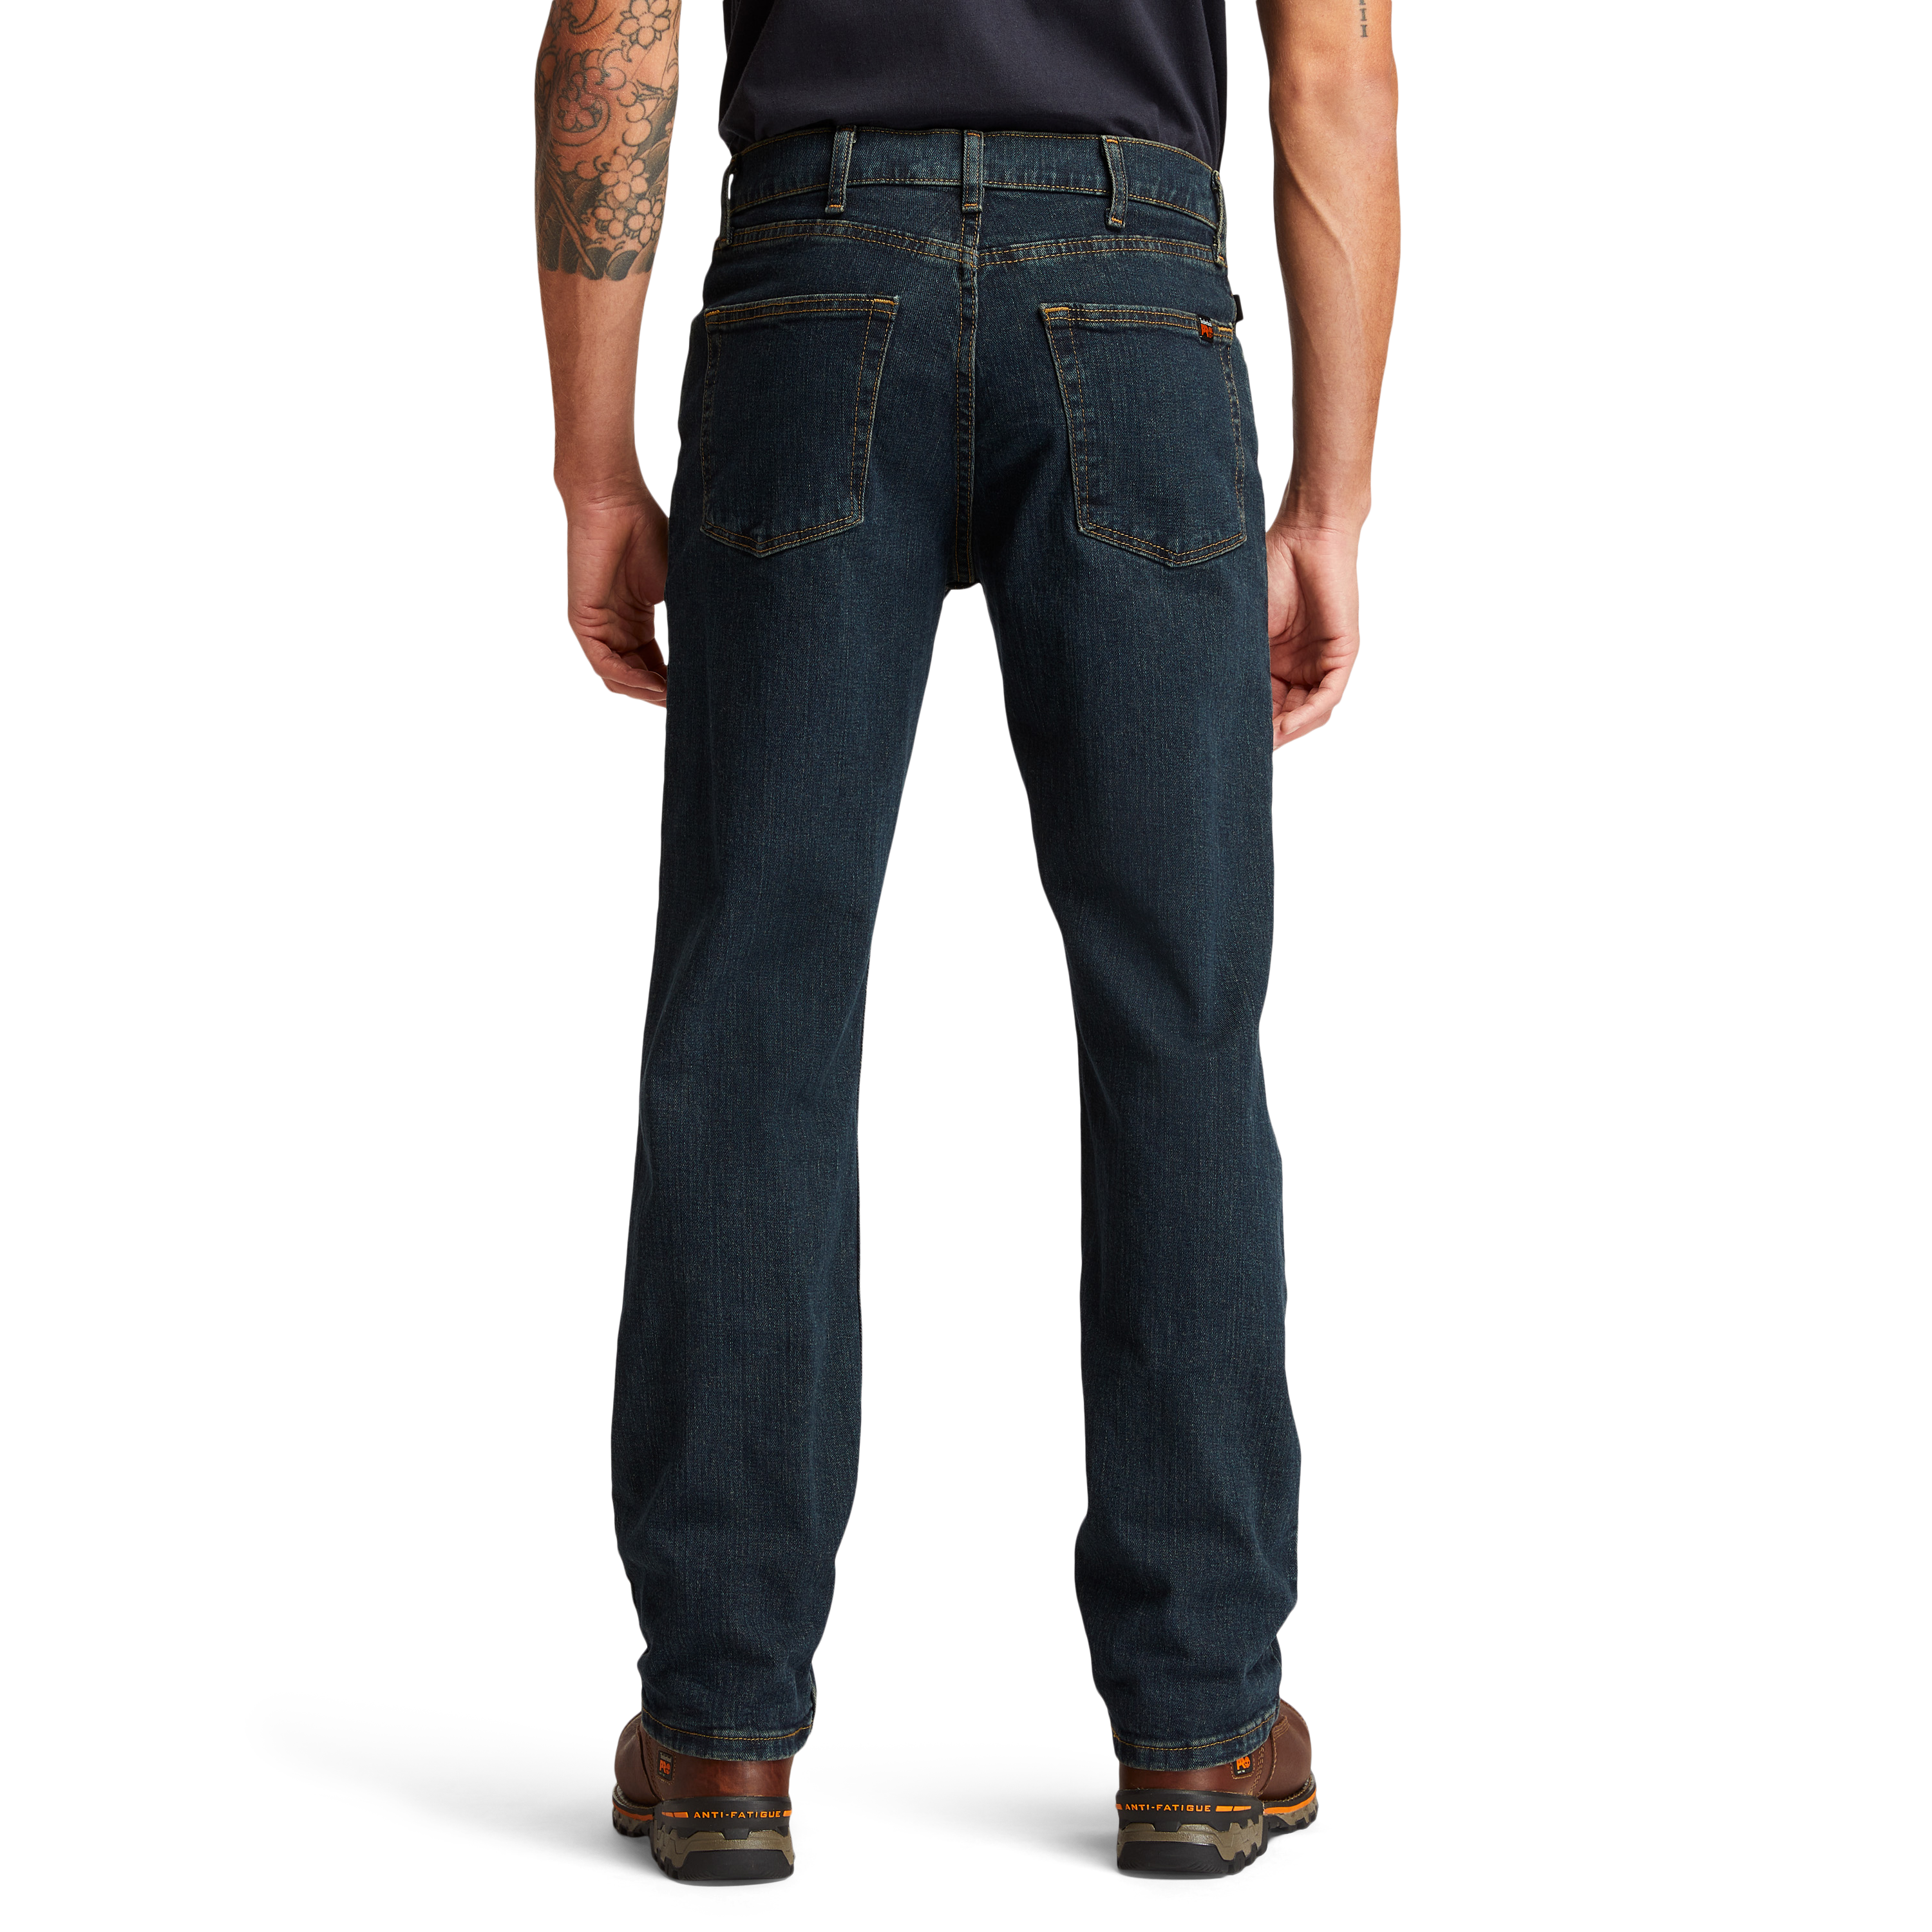 Timberland Grit-N-Grind Jeans - Mens